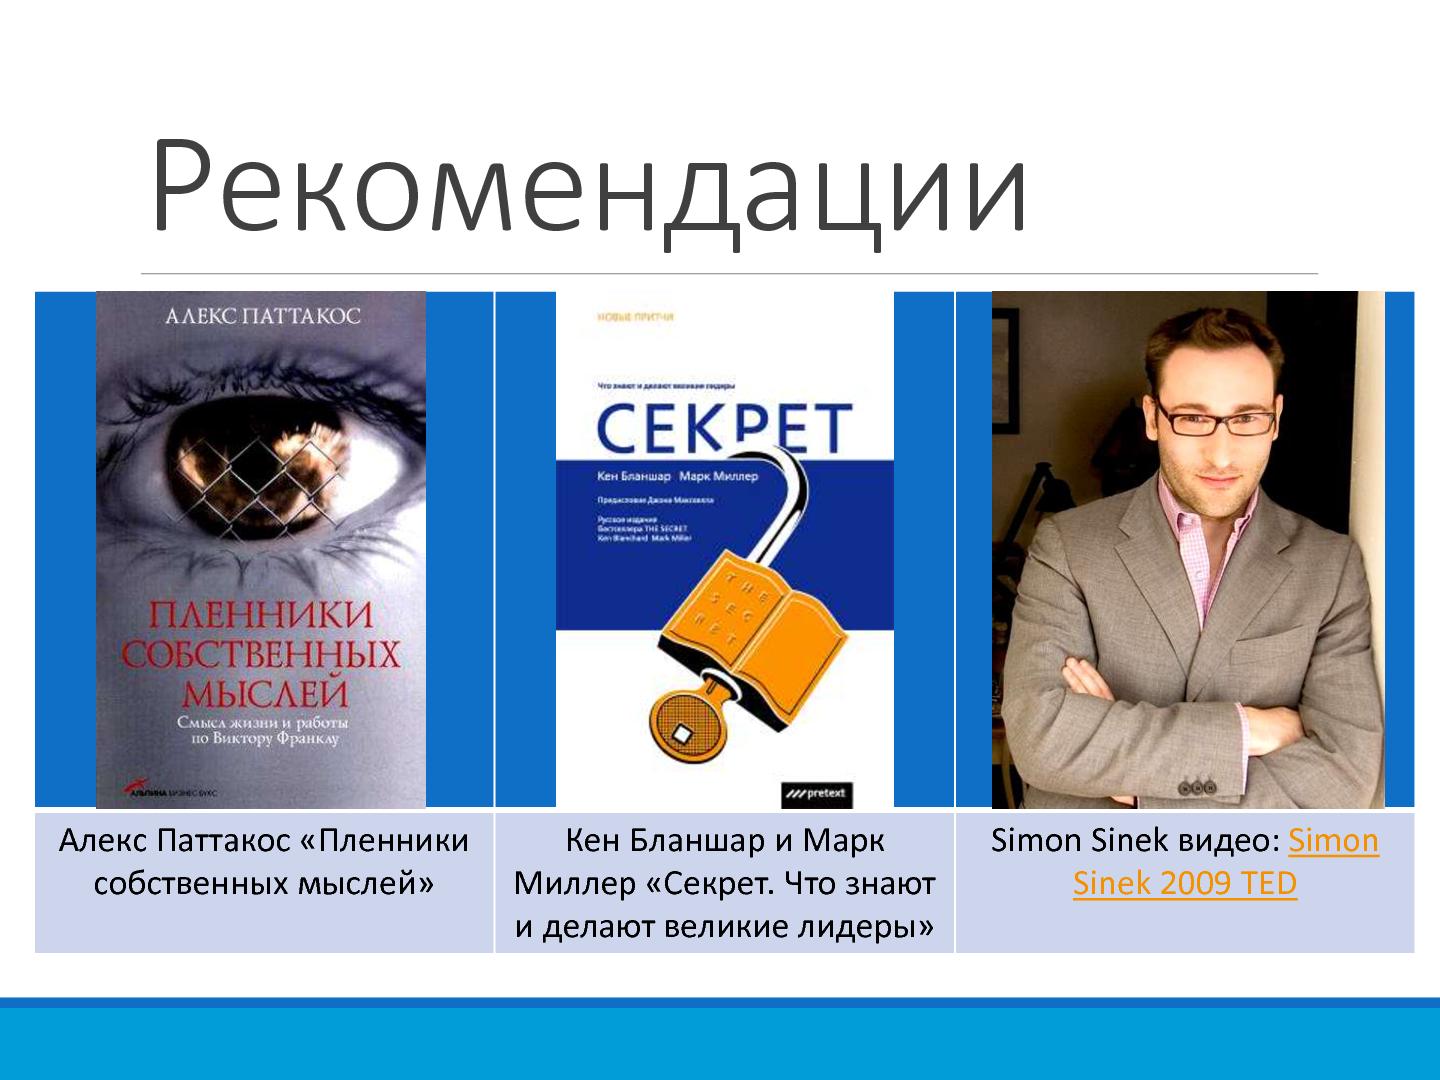 Файл:Кнут Vs Пряник в Agile (Алексей Мариза, AgileDays-2014).pdf